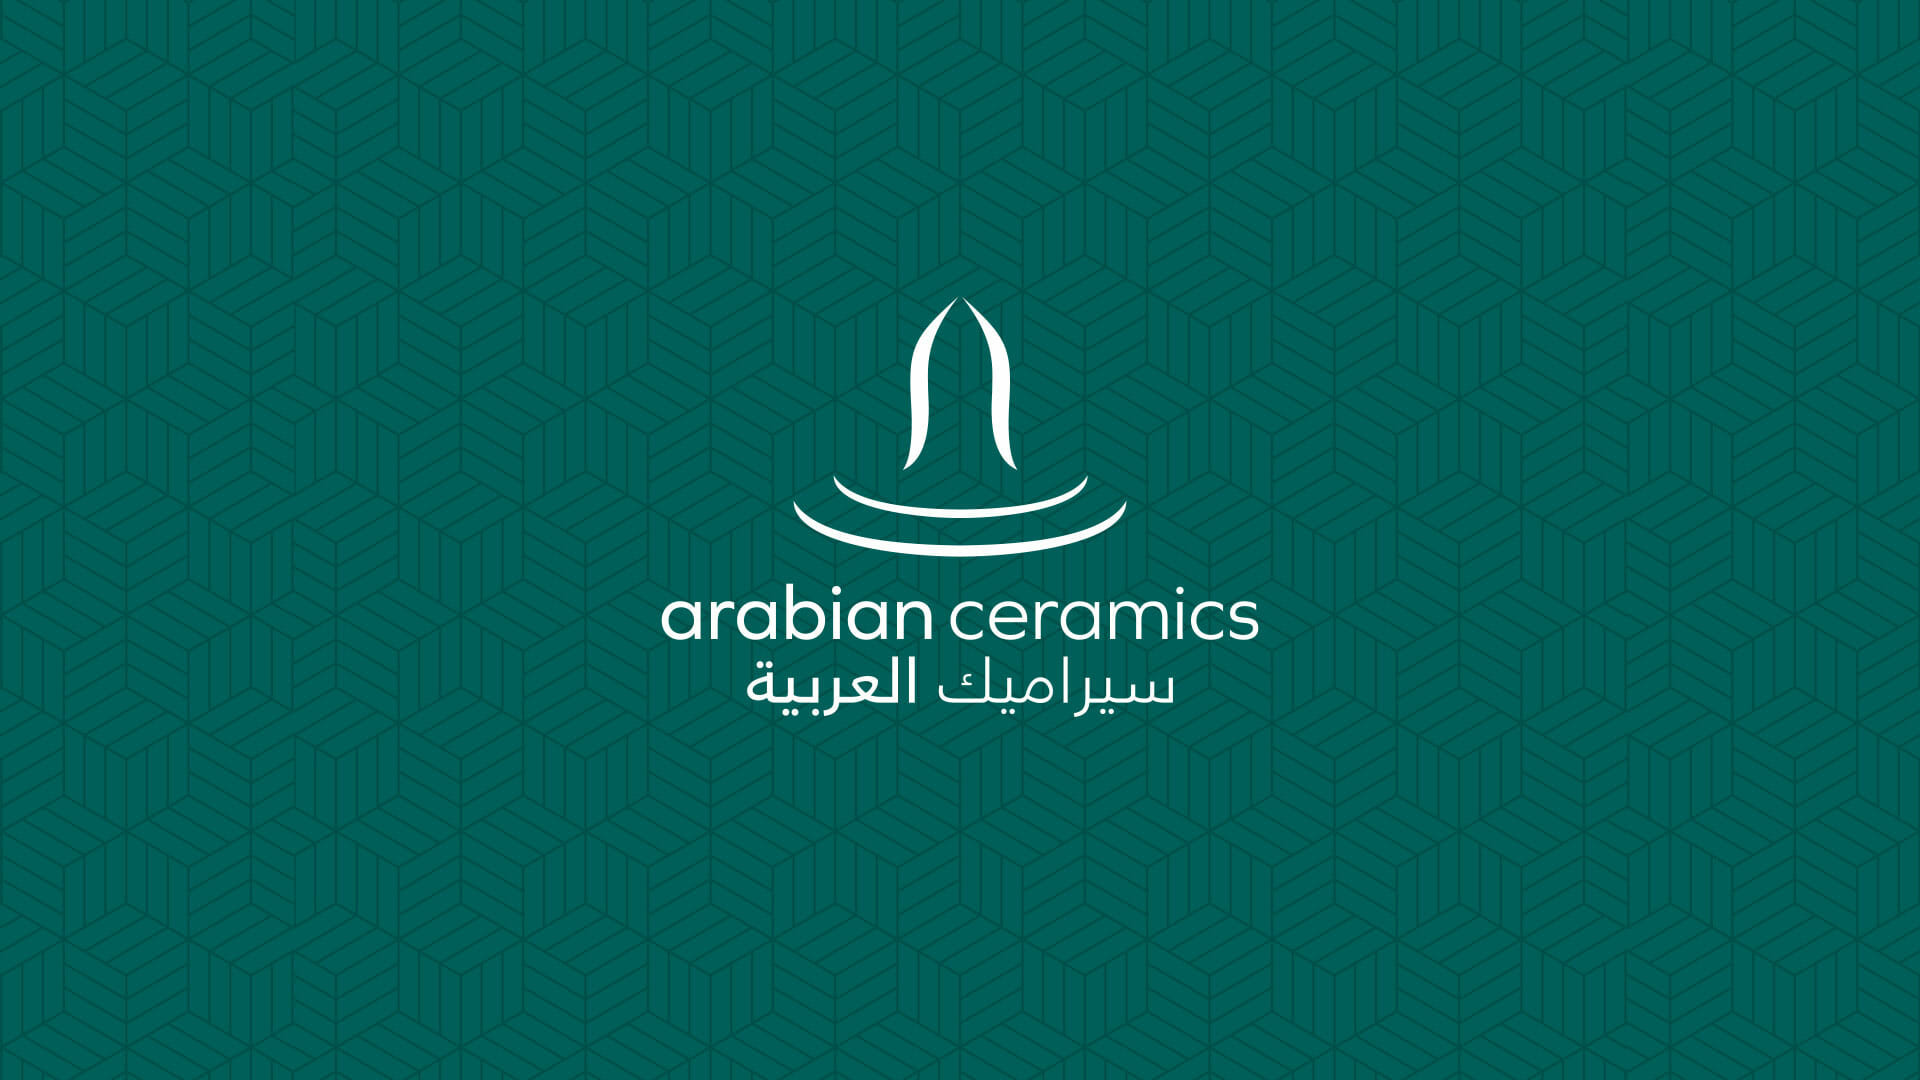 arabian ceramics saudi arabia logo design